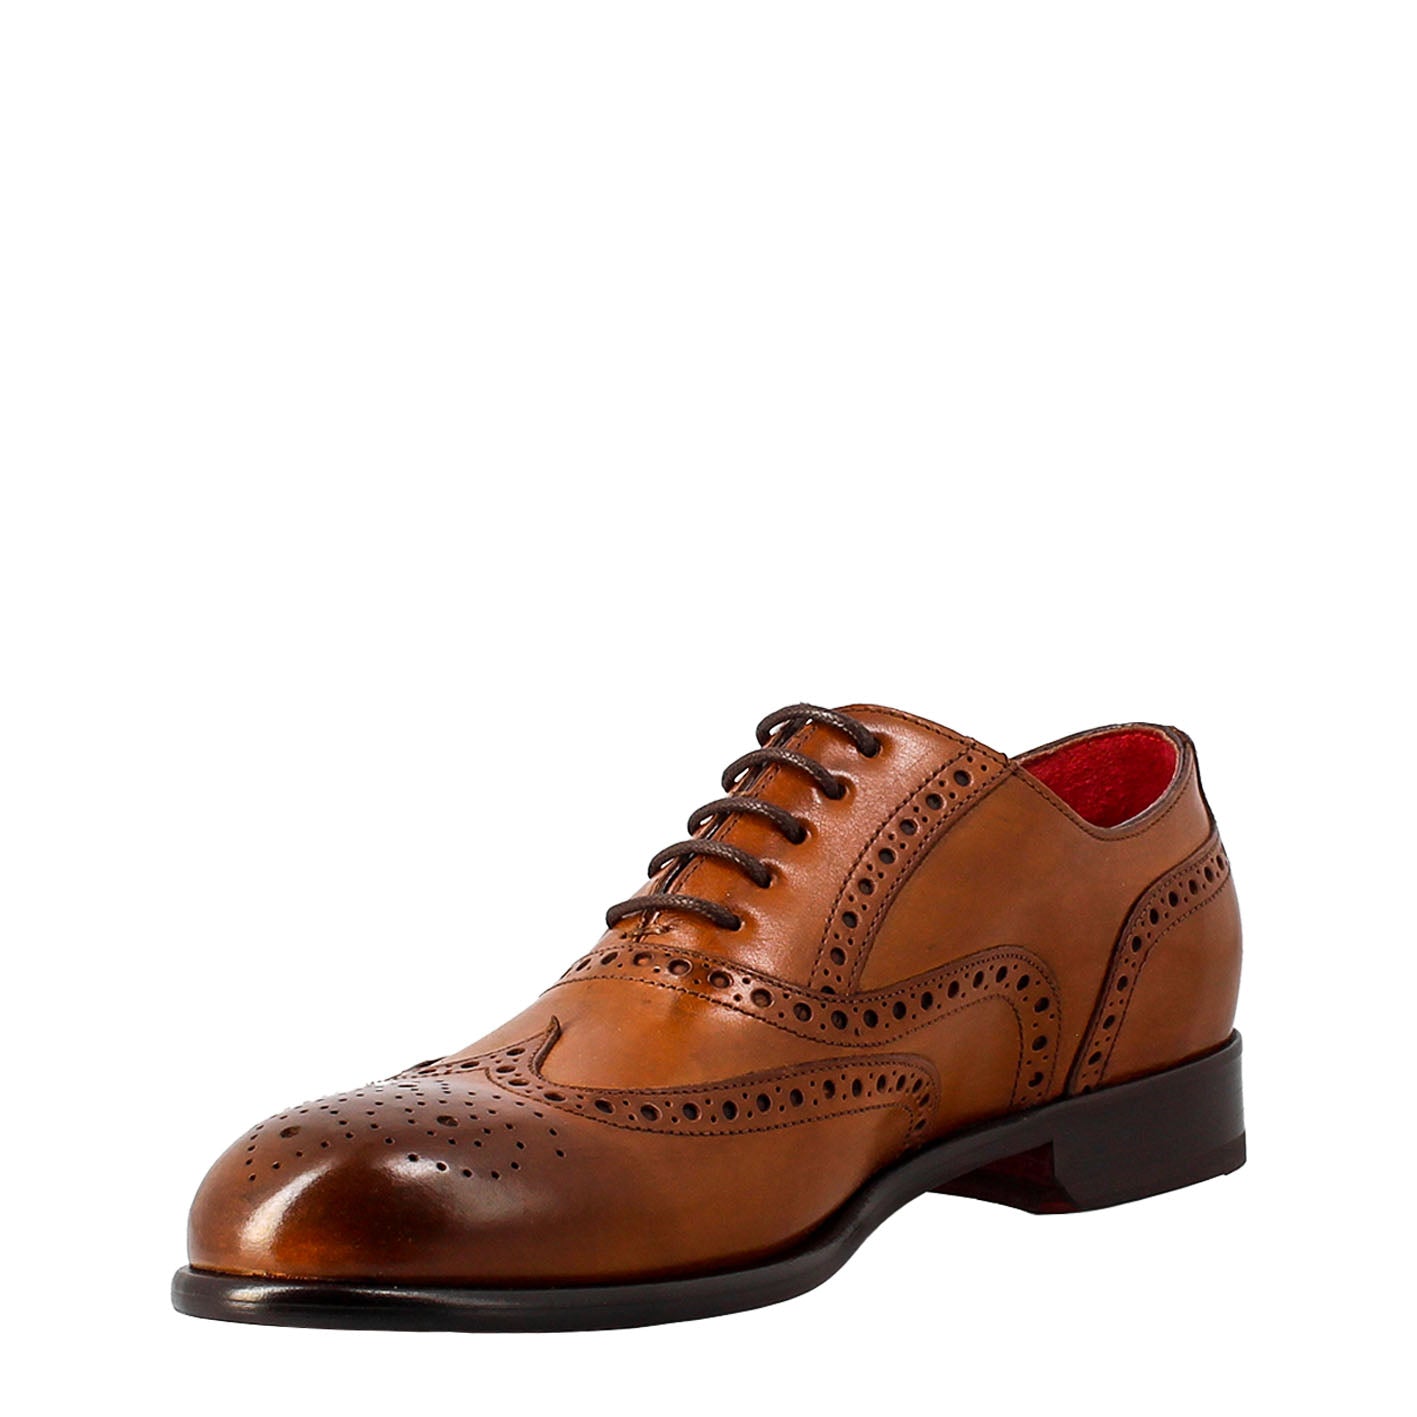 Men's elegant brown leather oxford brogue